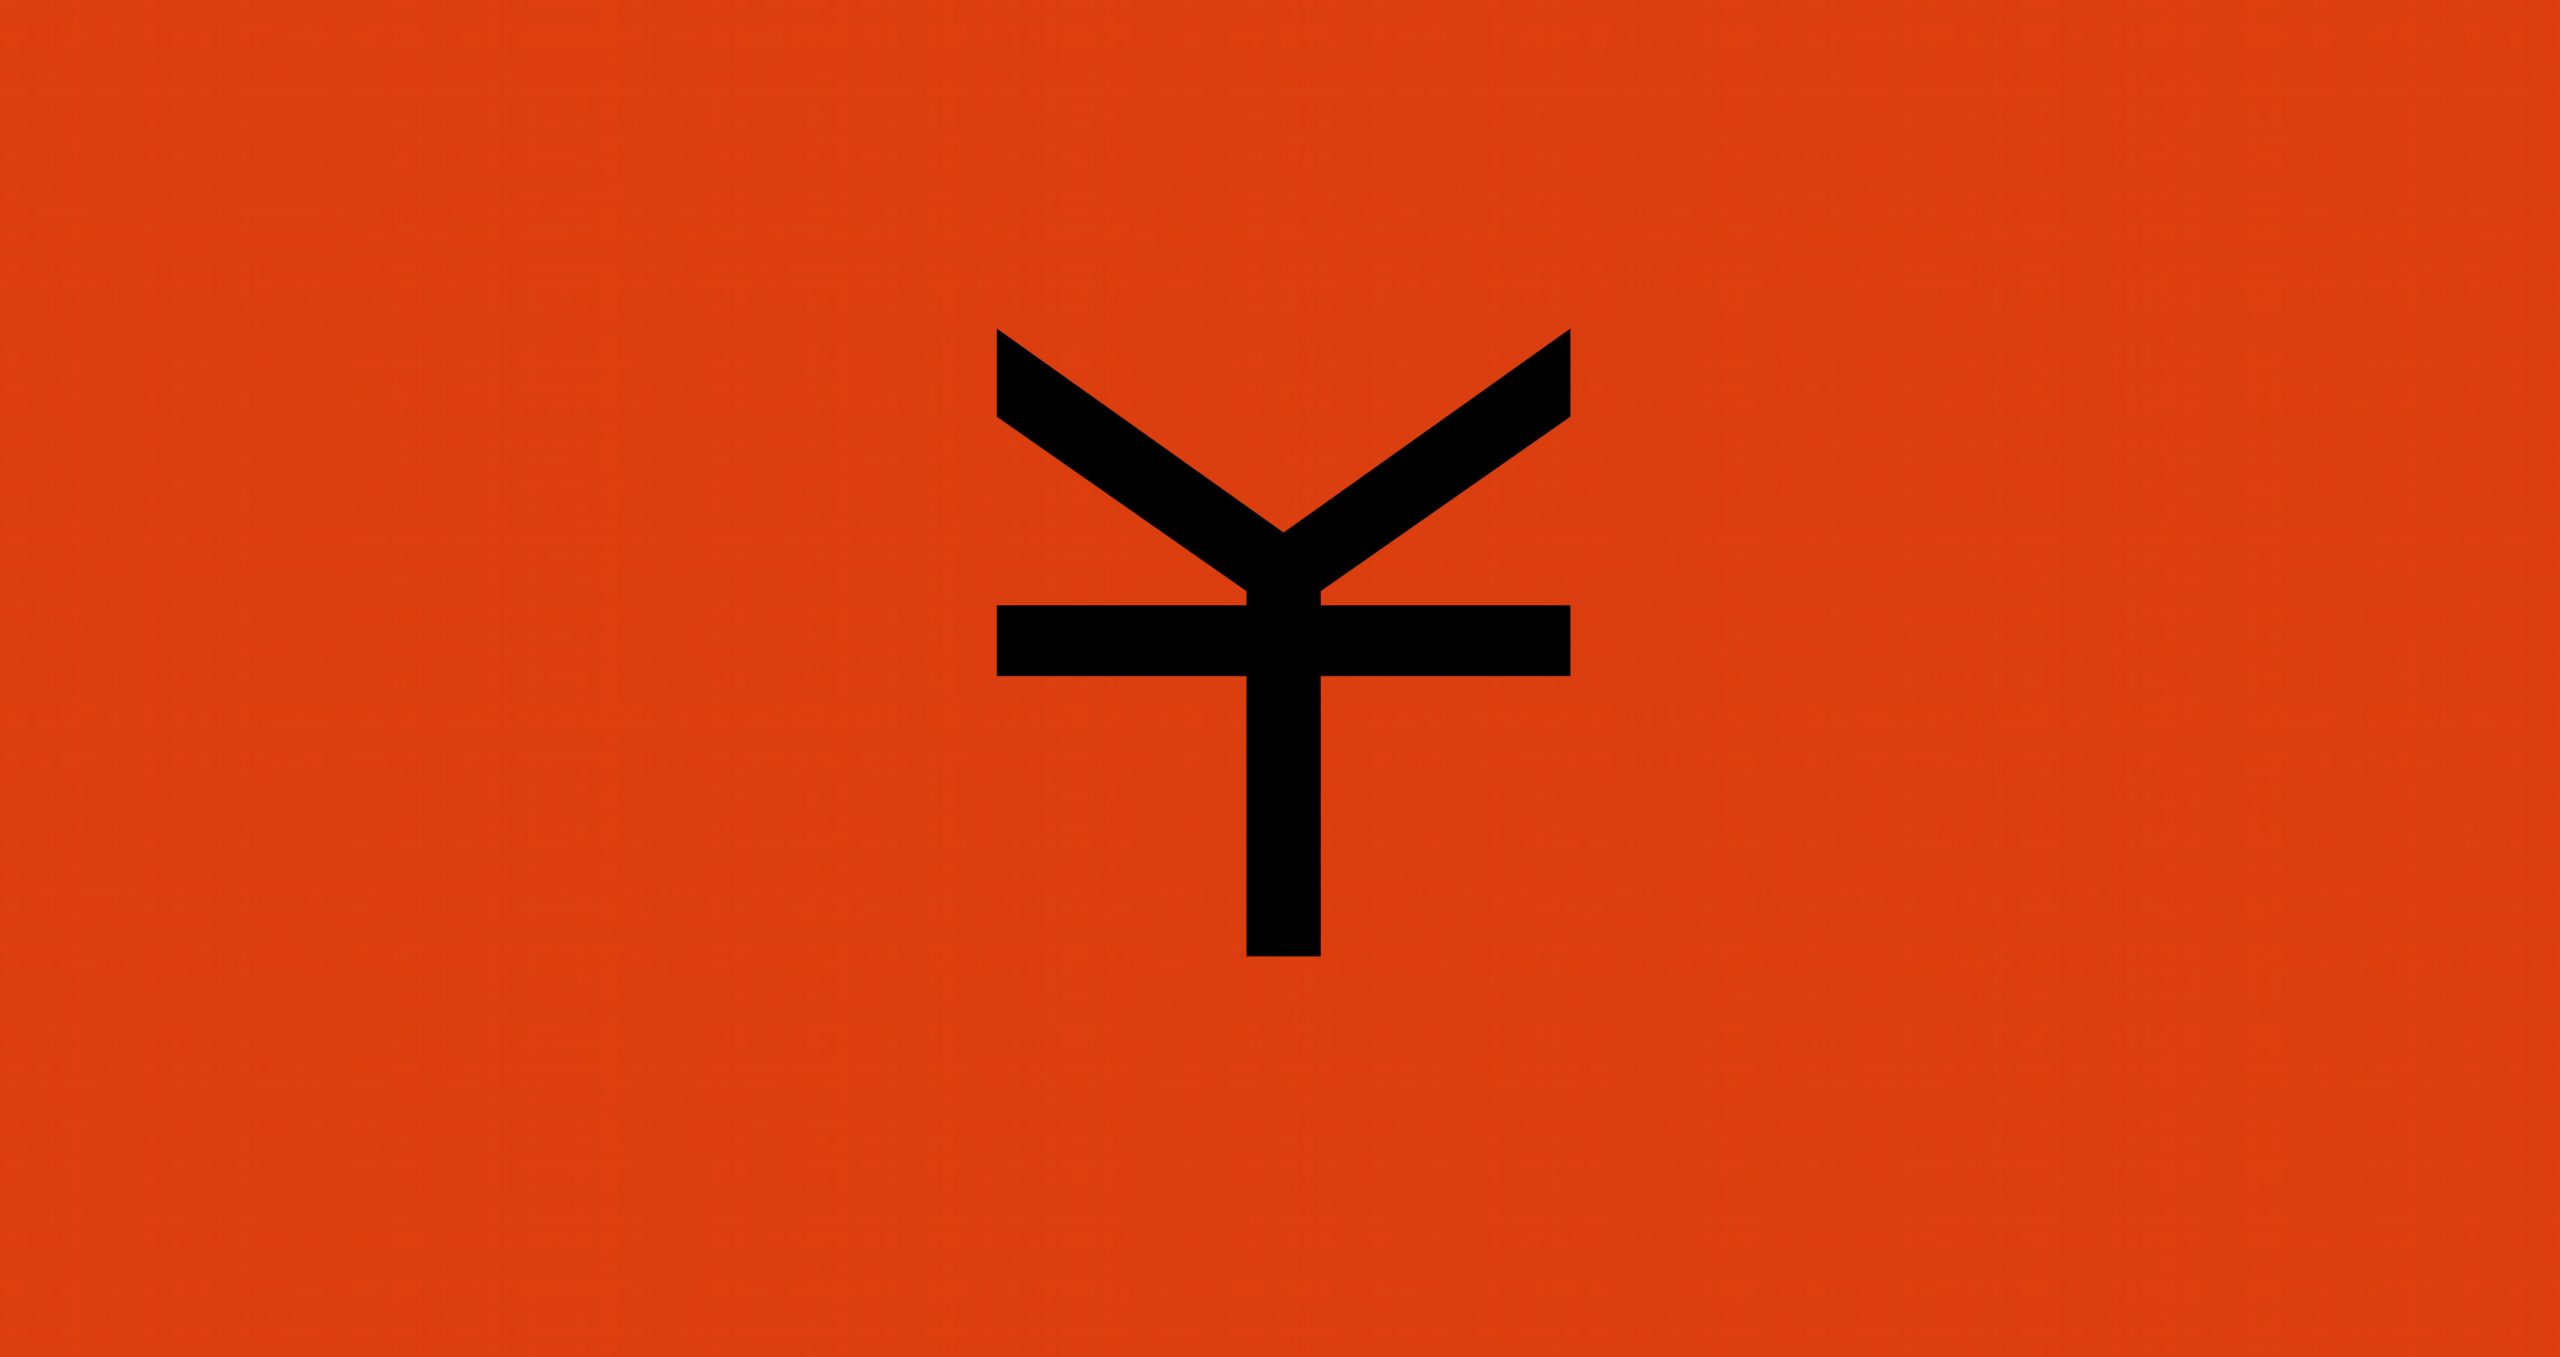 Imagen símbolo de FuerteType Foundry sobre fondo rojo